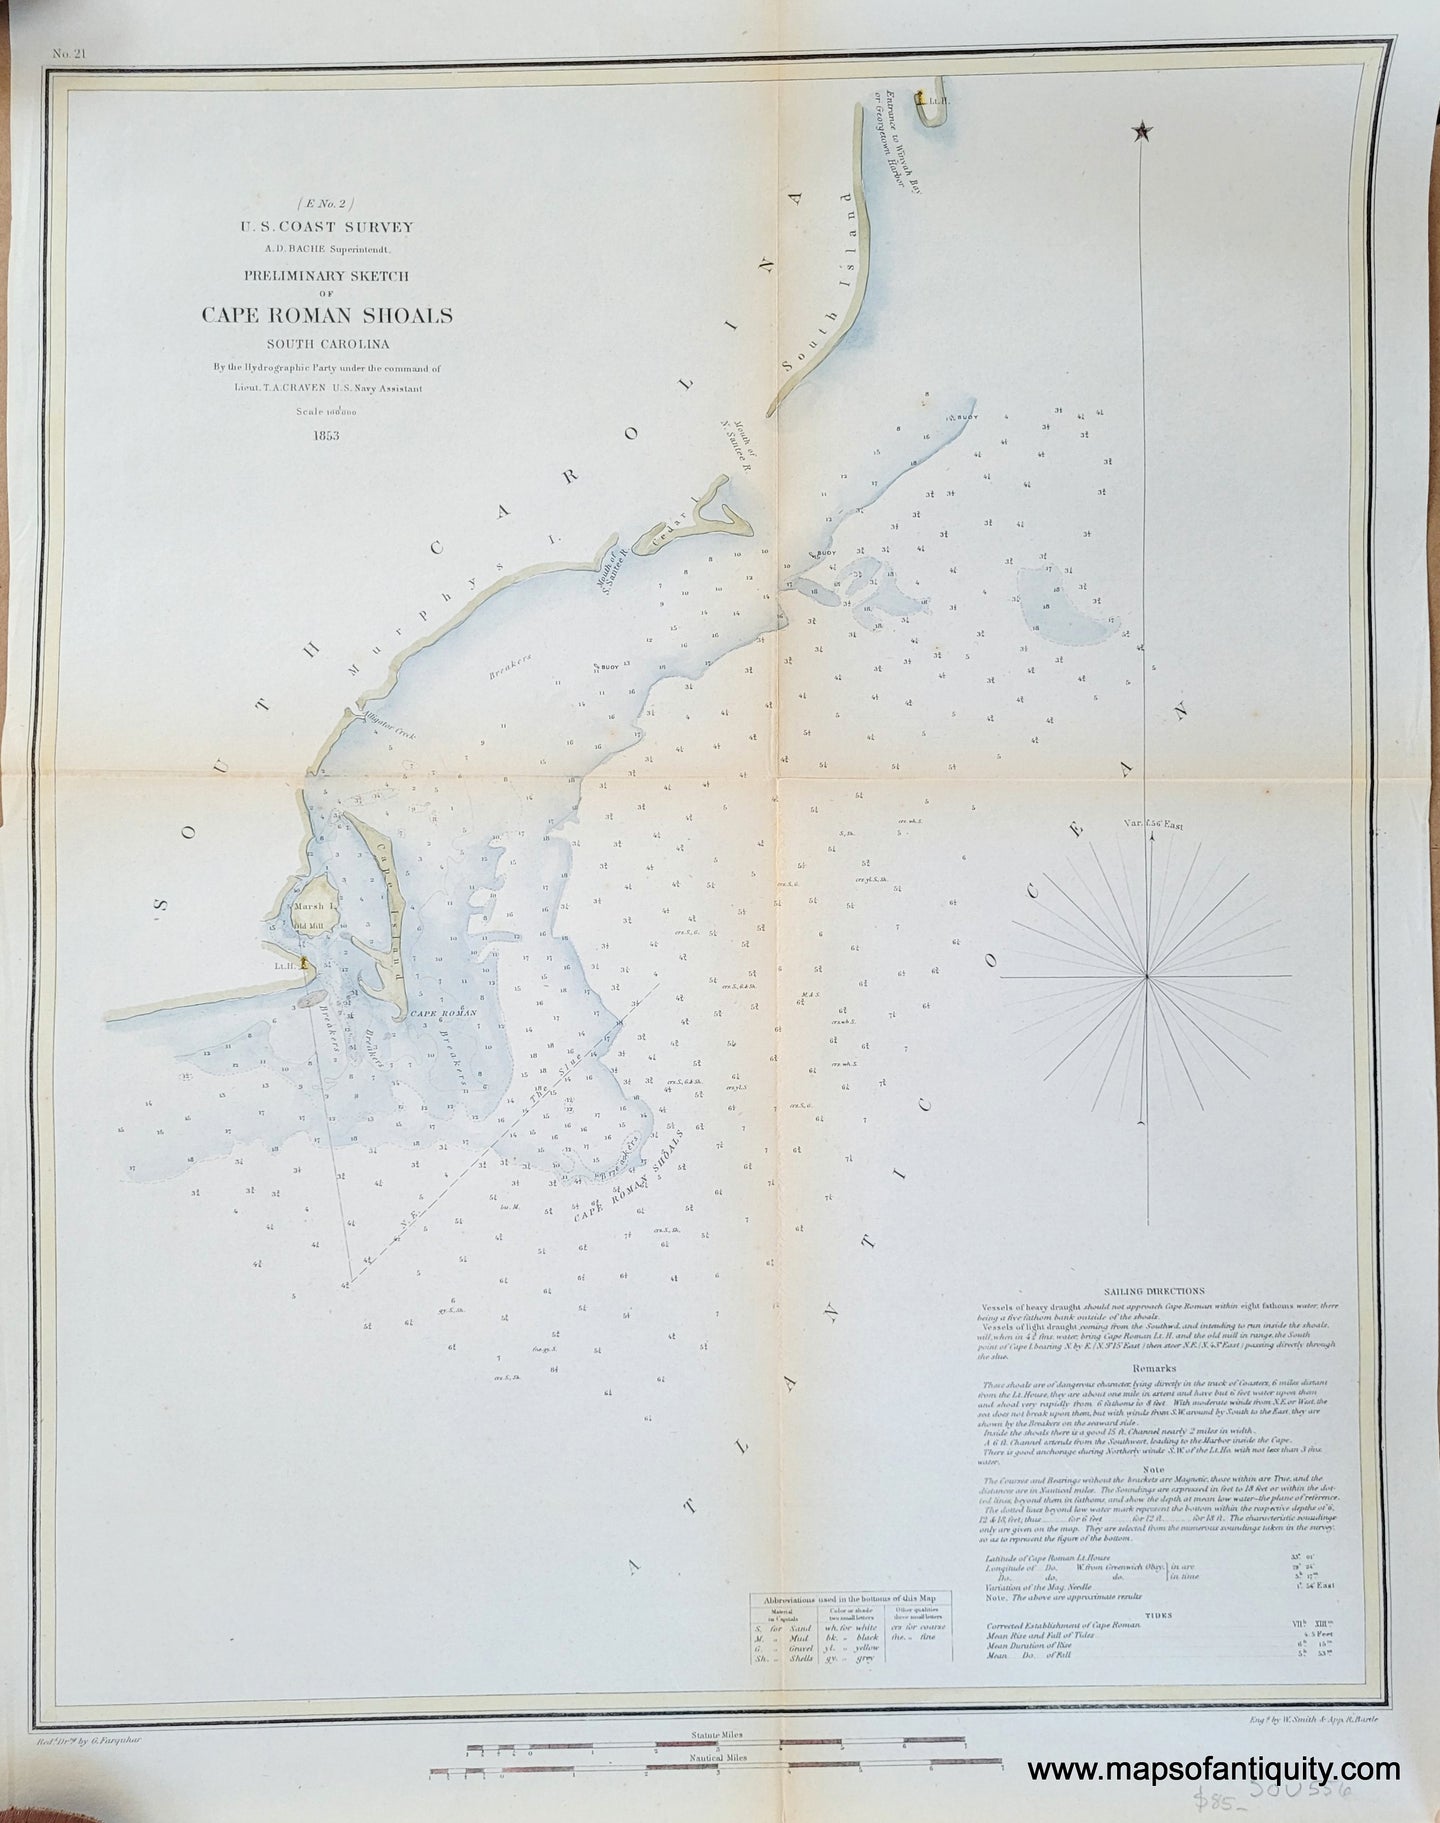 Antique-Map-Chart-Cape-Roman-Shoals-South-Carolina-U.-S.-Coast-Coastal-Chart-Survey-1853-Maps-Of-Antiquity